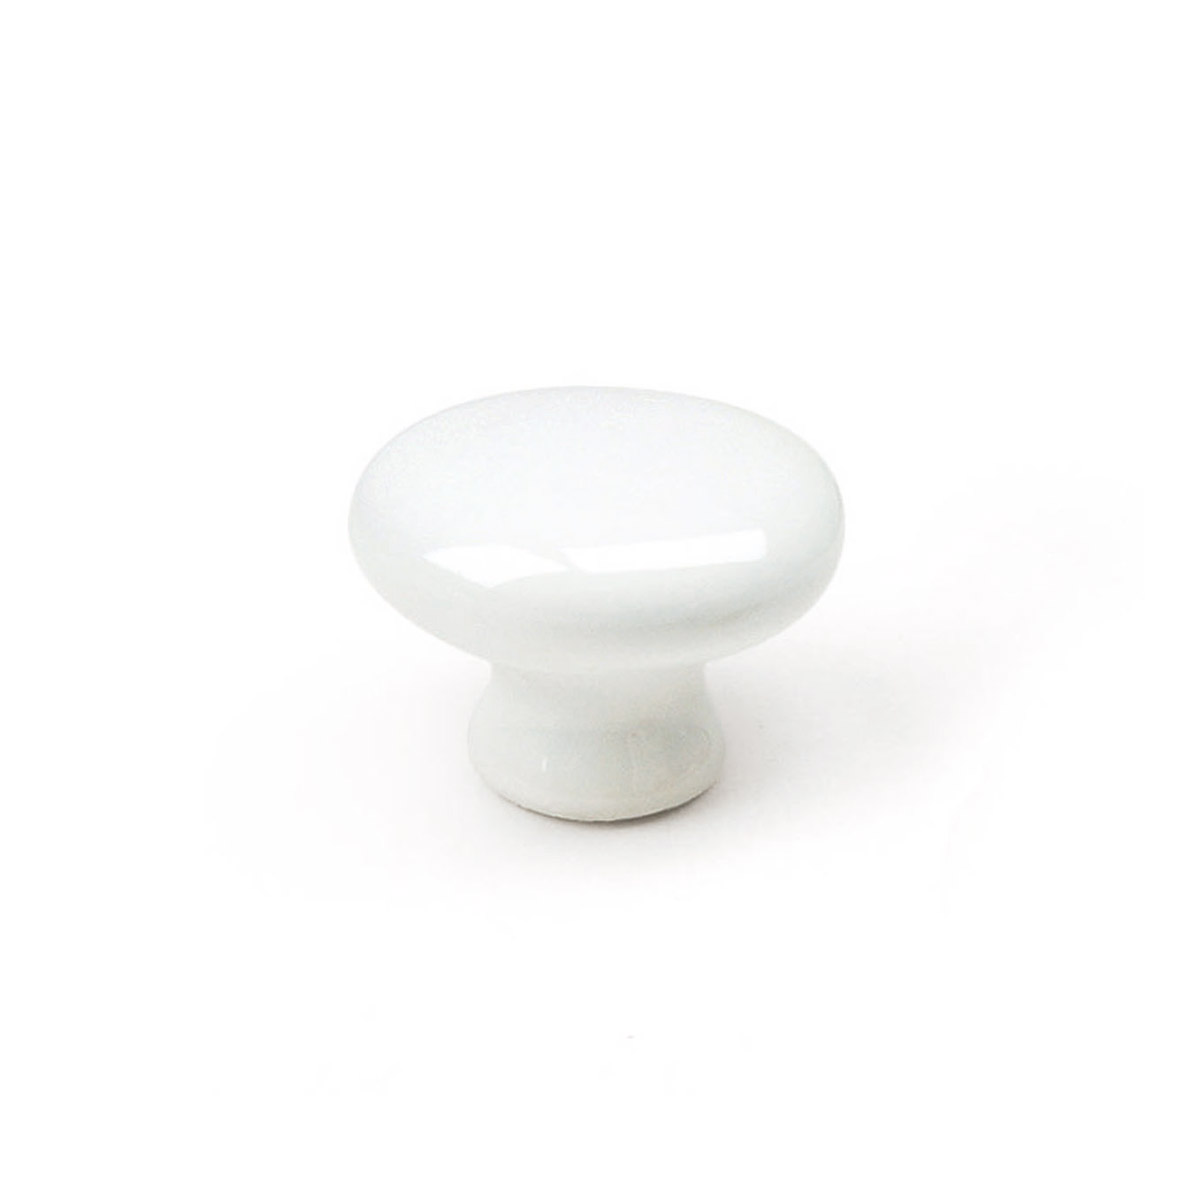 Pomo en porcelana blanco, dimensiones: 31x31x23mm, Ø: 30mm